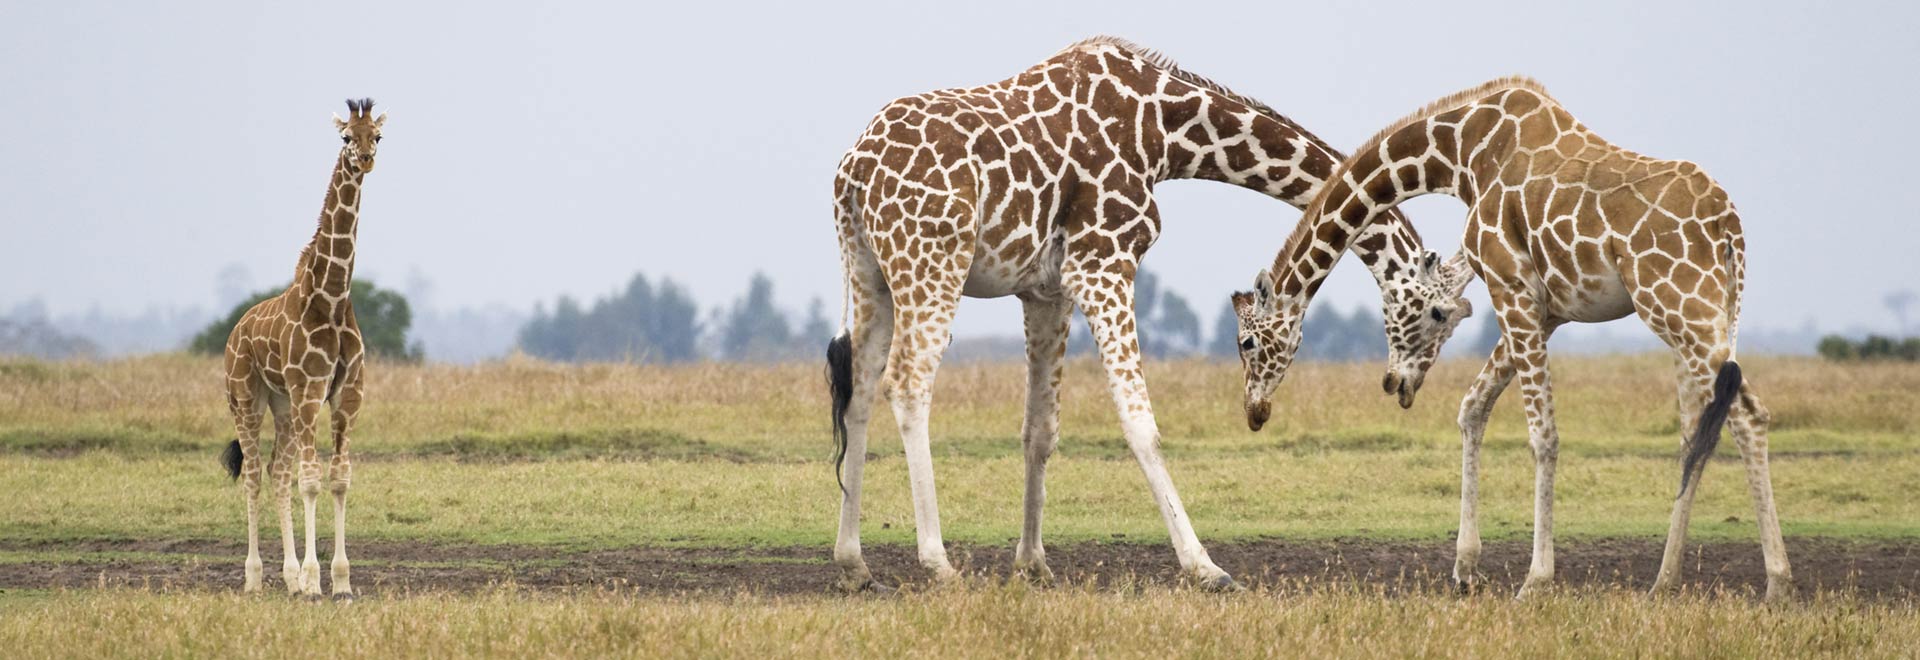 Africa Signature Kenya Tanzania Giraffes MH